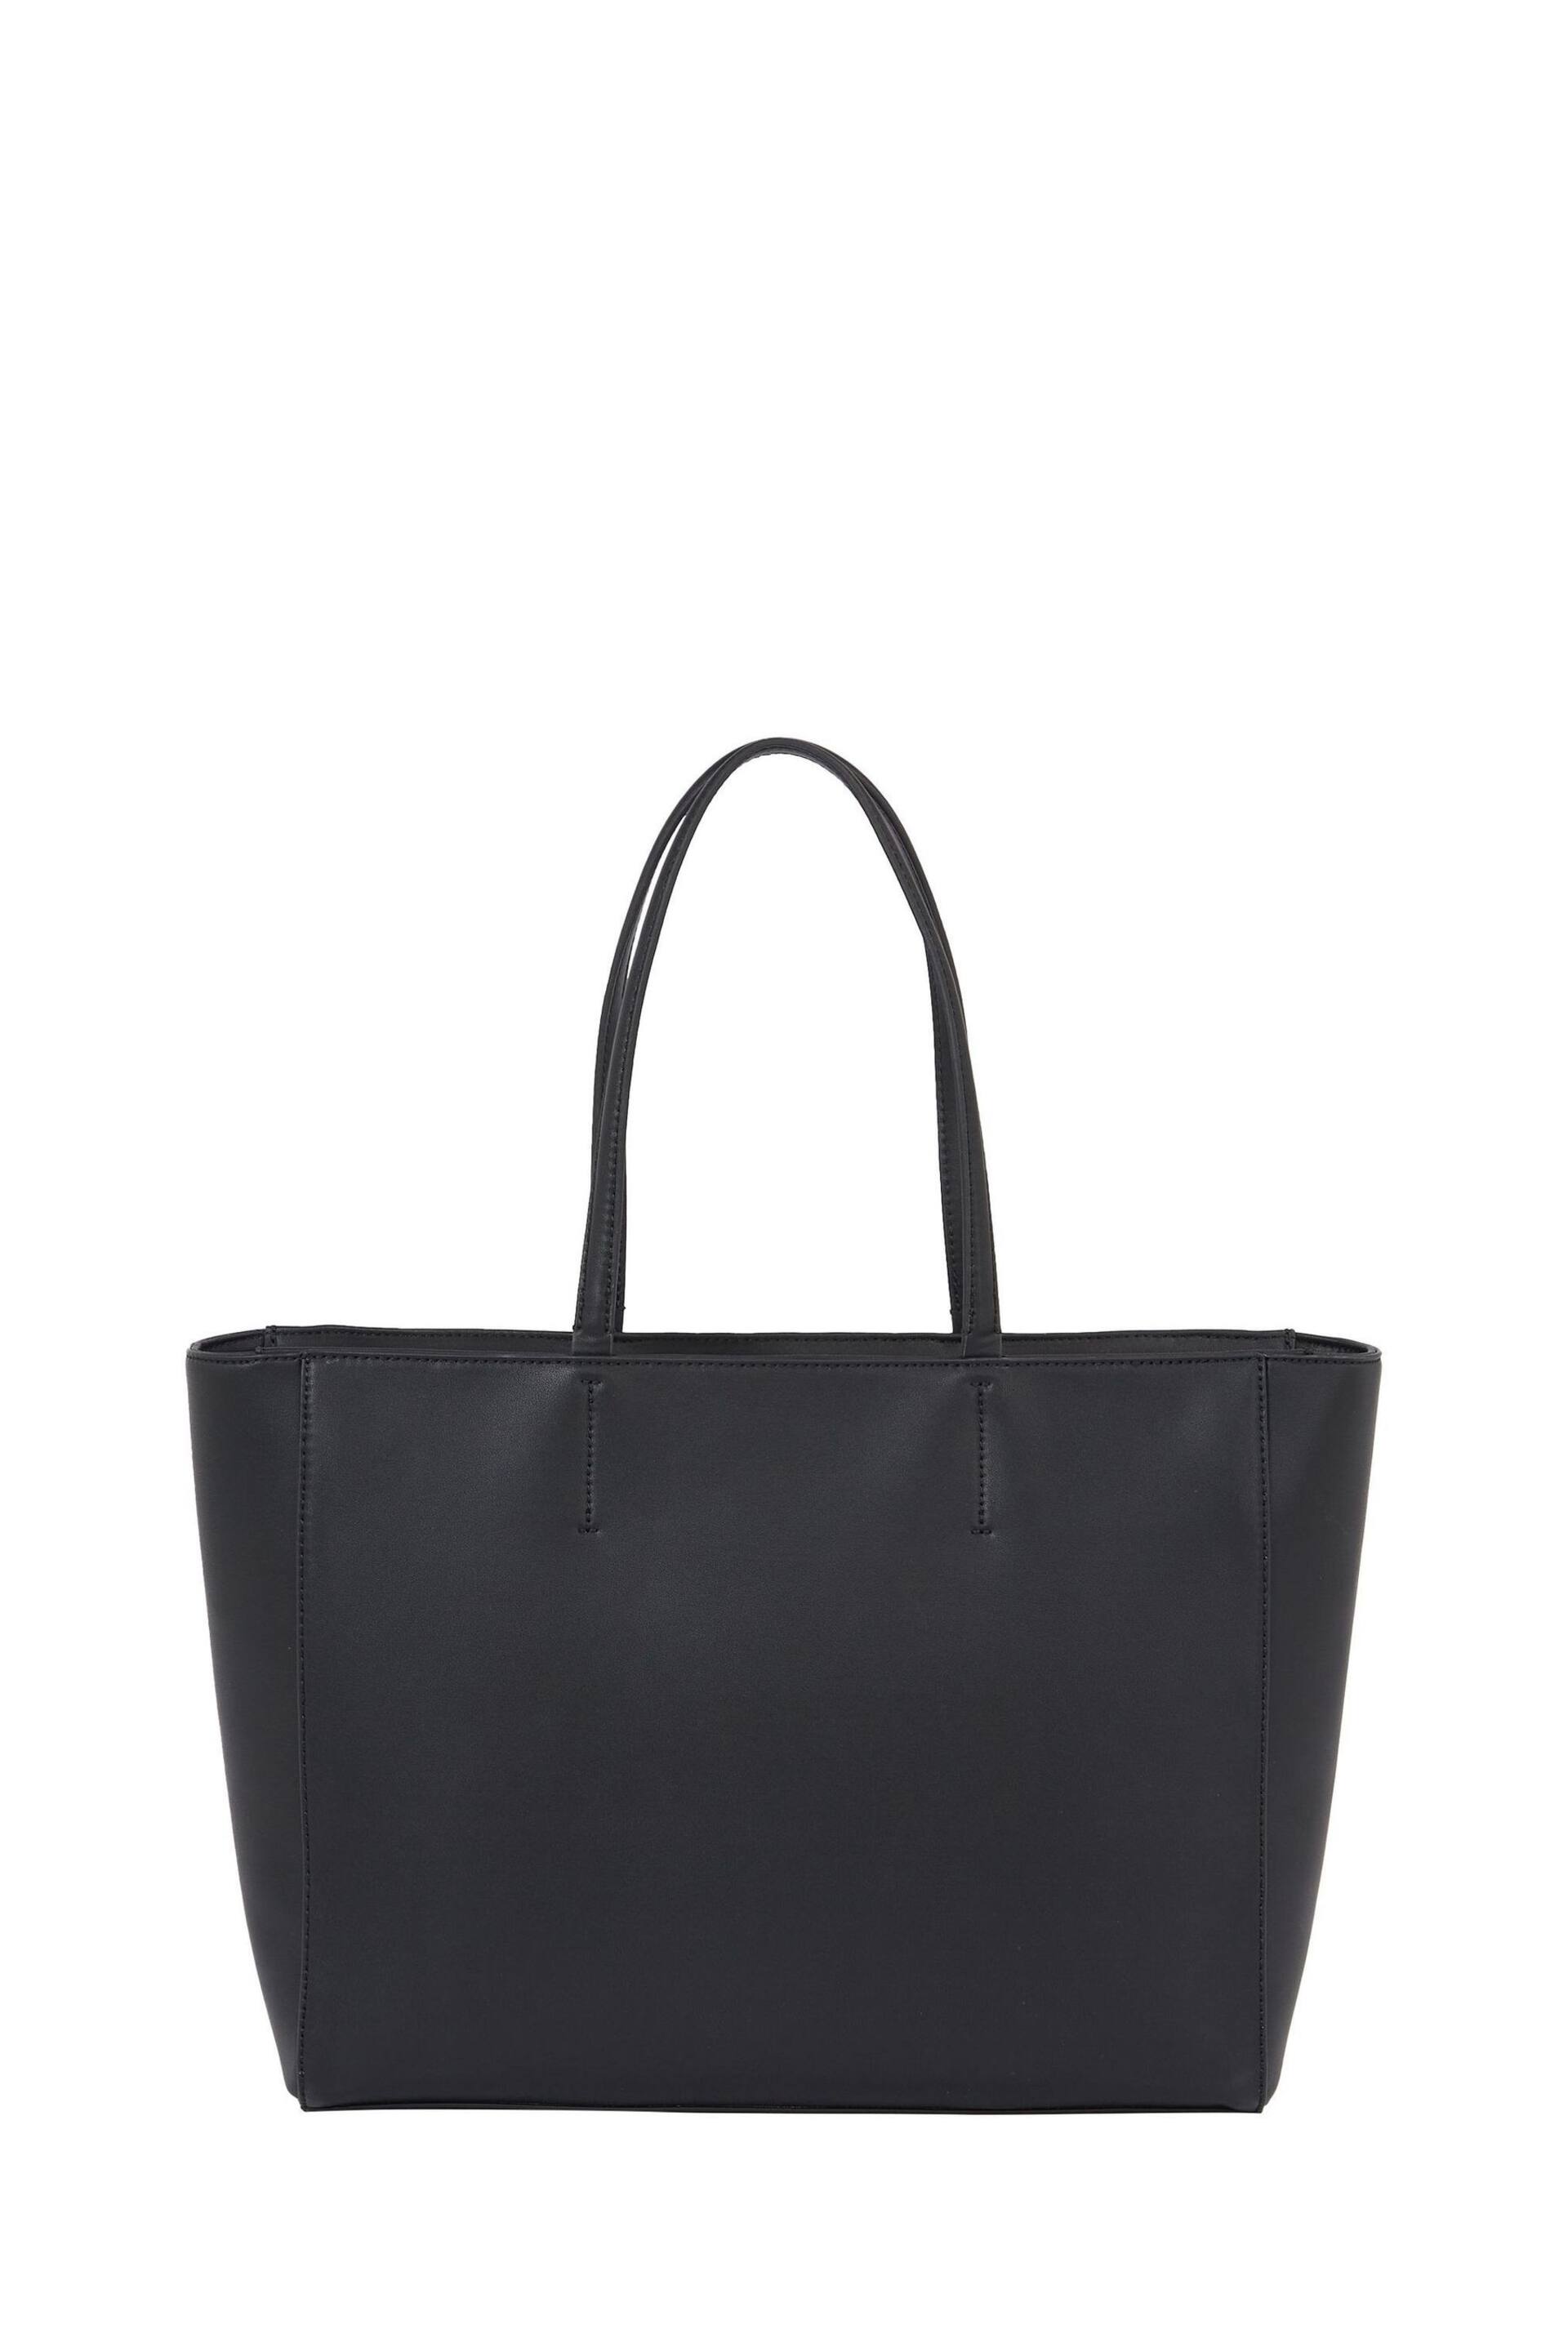 Calvin Klein Black Medium Shopper Bag - Image 3 of 4